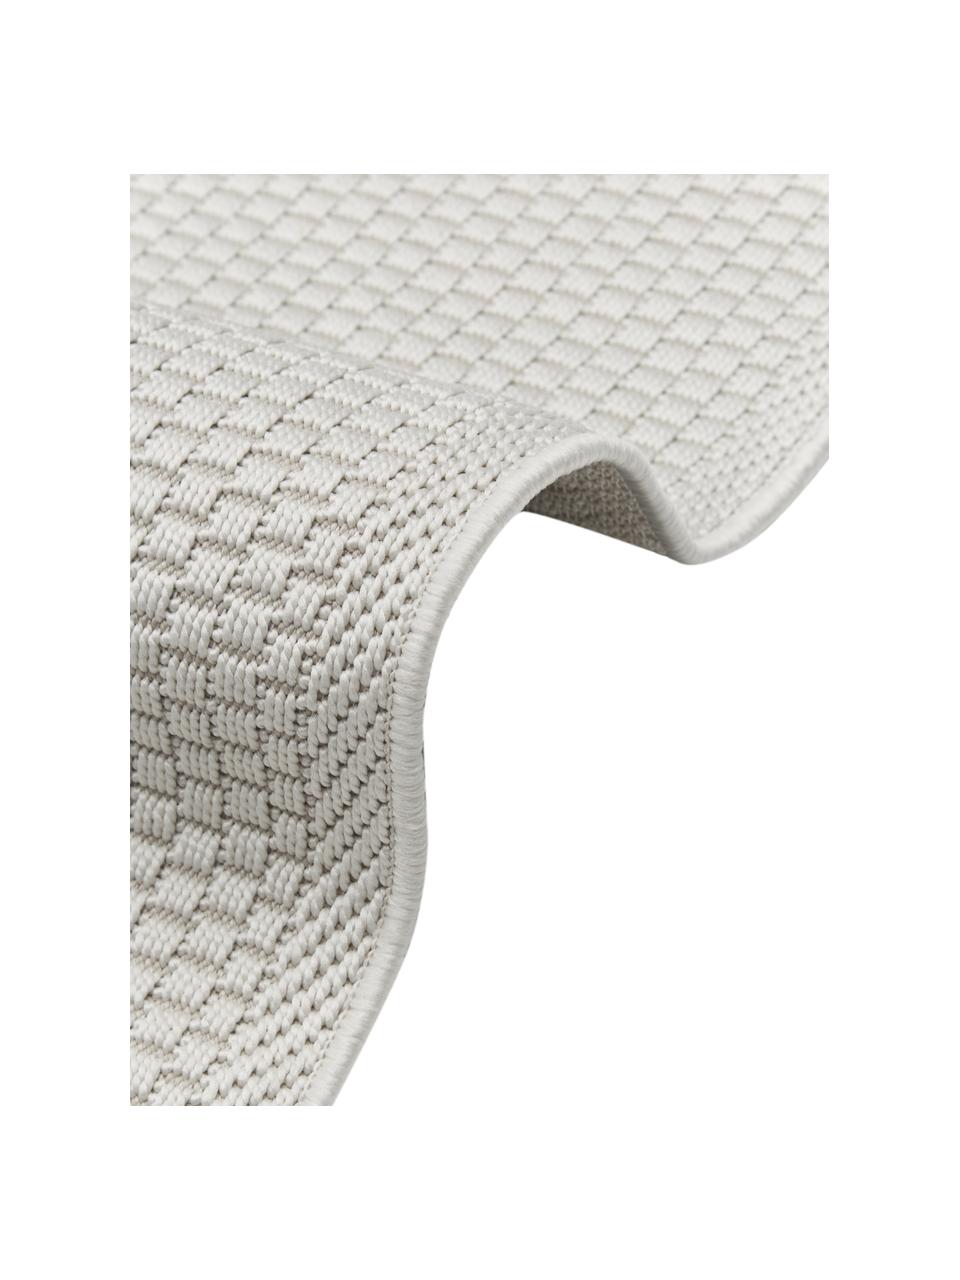 Tappeto ovale da interno-esterno color bianco crema Toronto, 100% polipropilene, Bianco crema, Larg. 200 x Lung. 300 cm (taglia L)